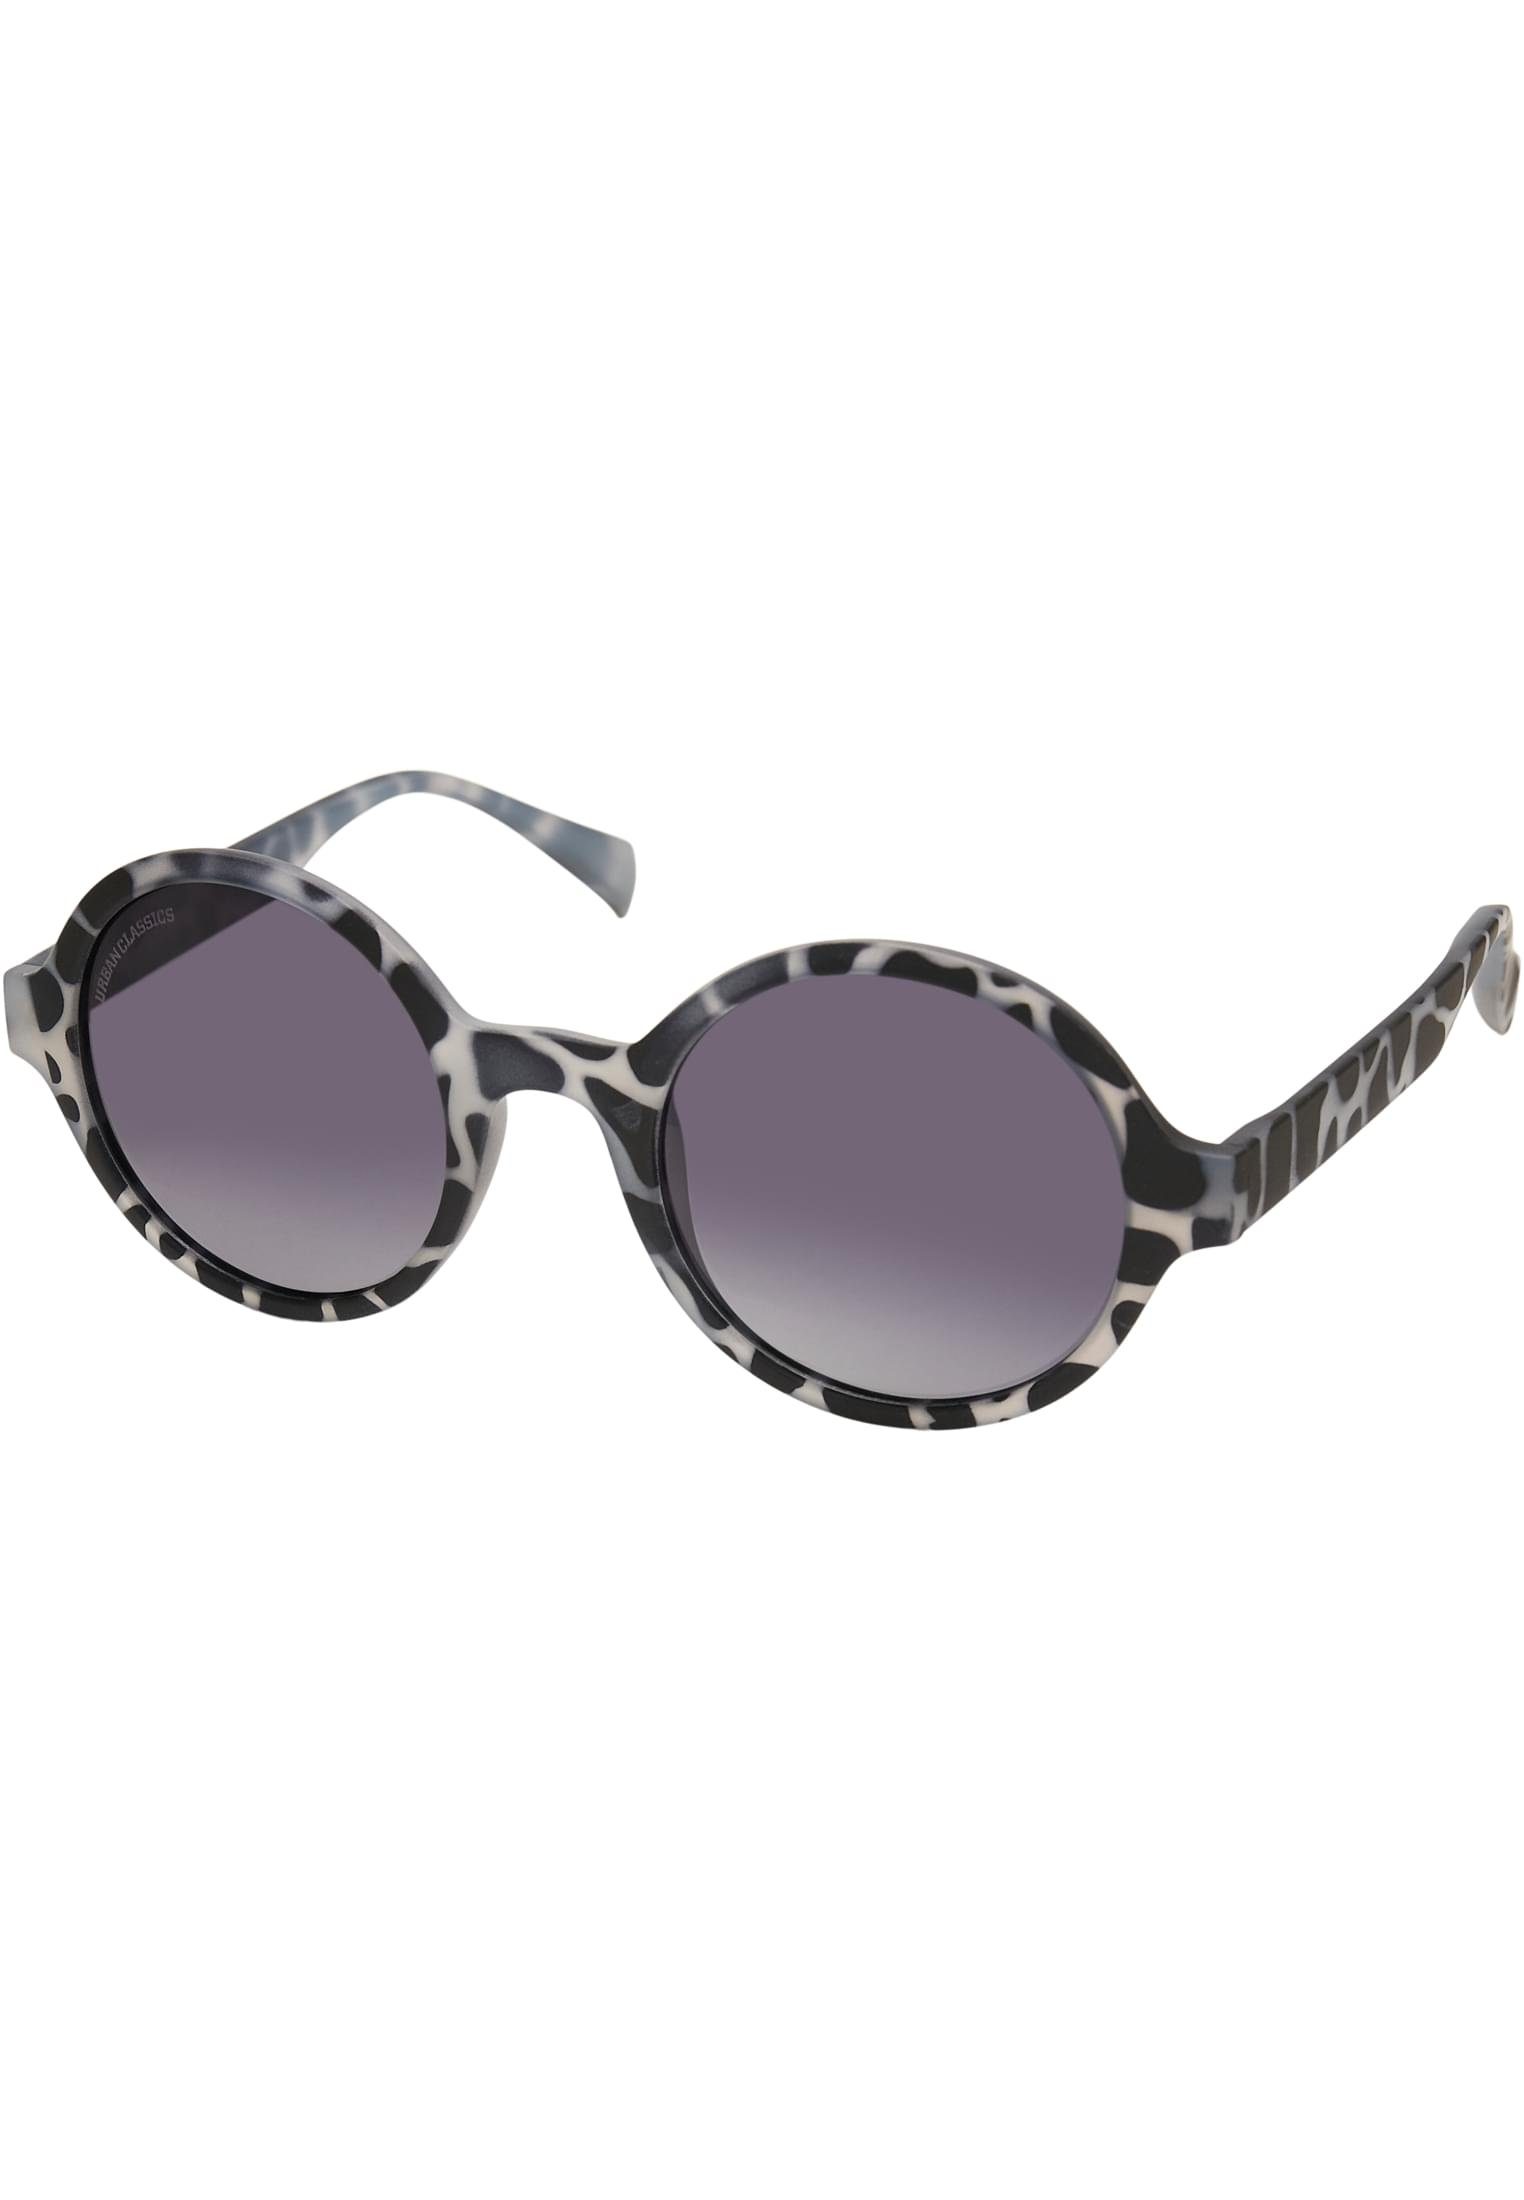 Accessoires Funk CLASSICS Sonnenbrille leo/black grey URBAN UC Sunglasses Retro